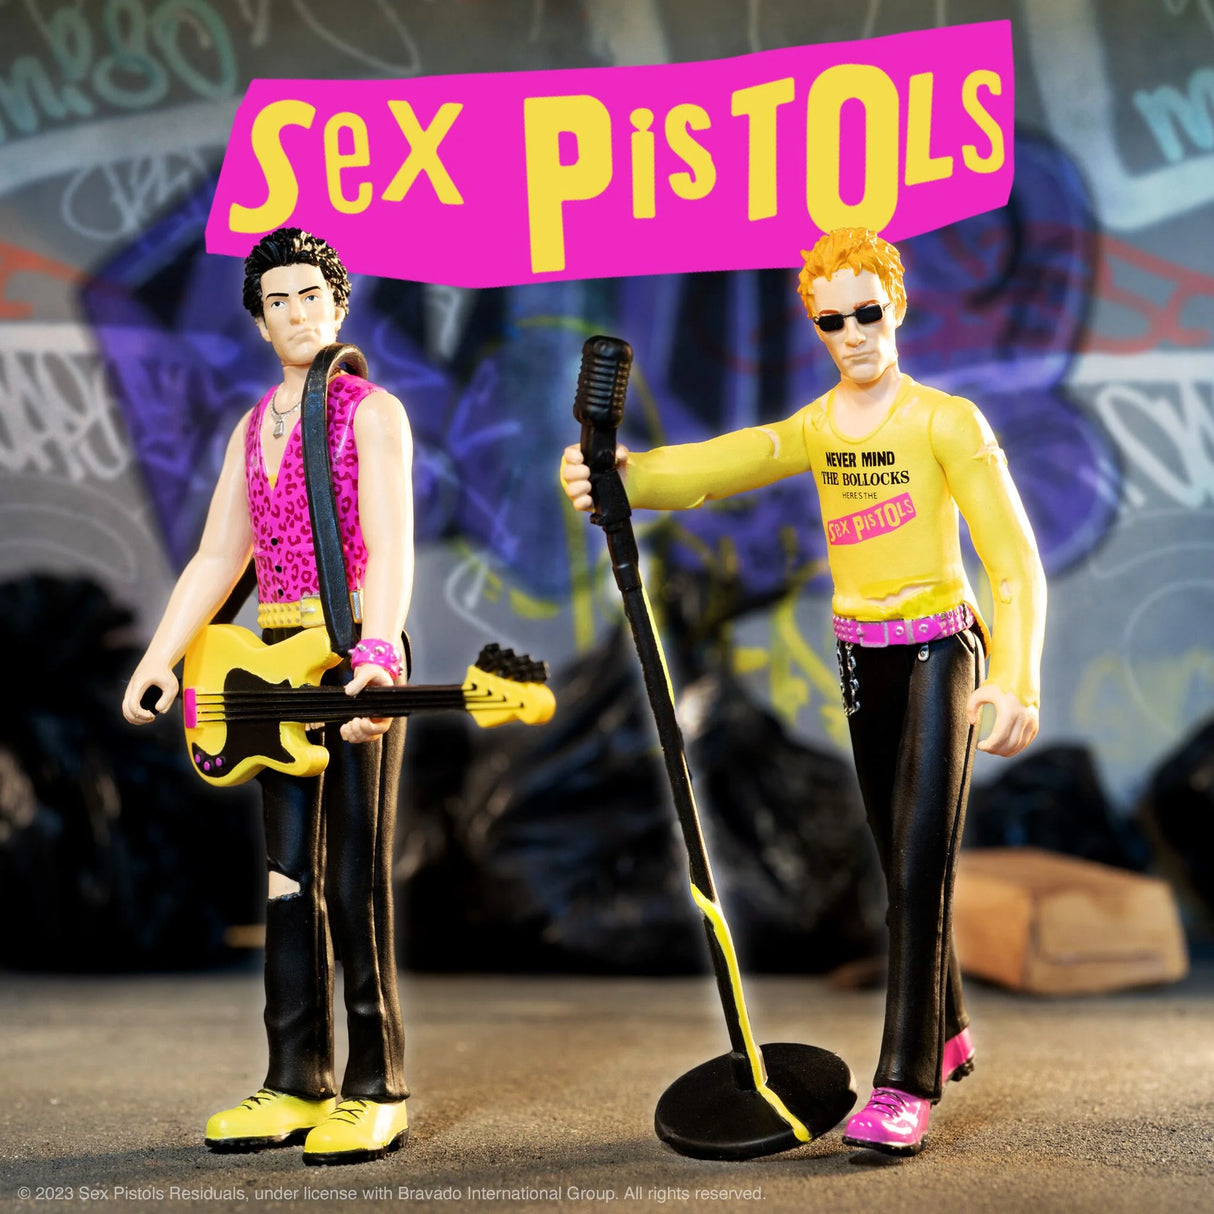 Sex Pistols ReAction Figures Wave 2 Johnny Rotten (Never Mind The Bollocks)